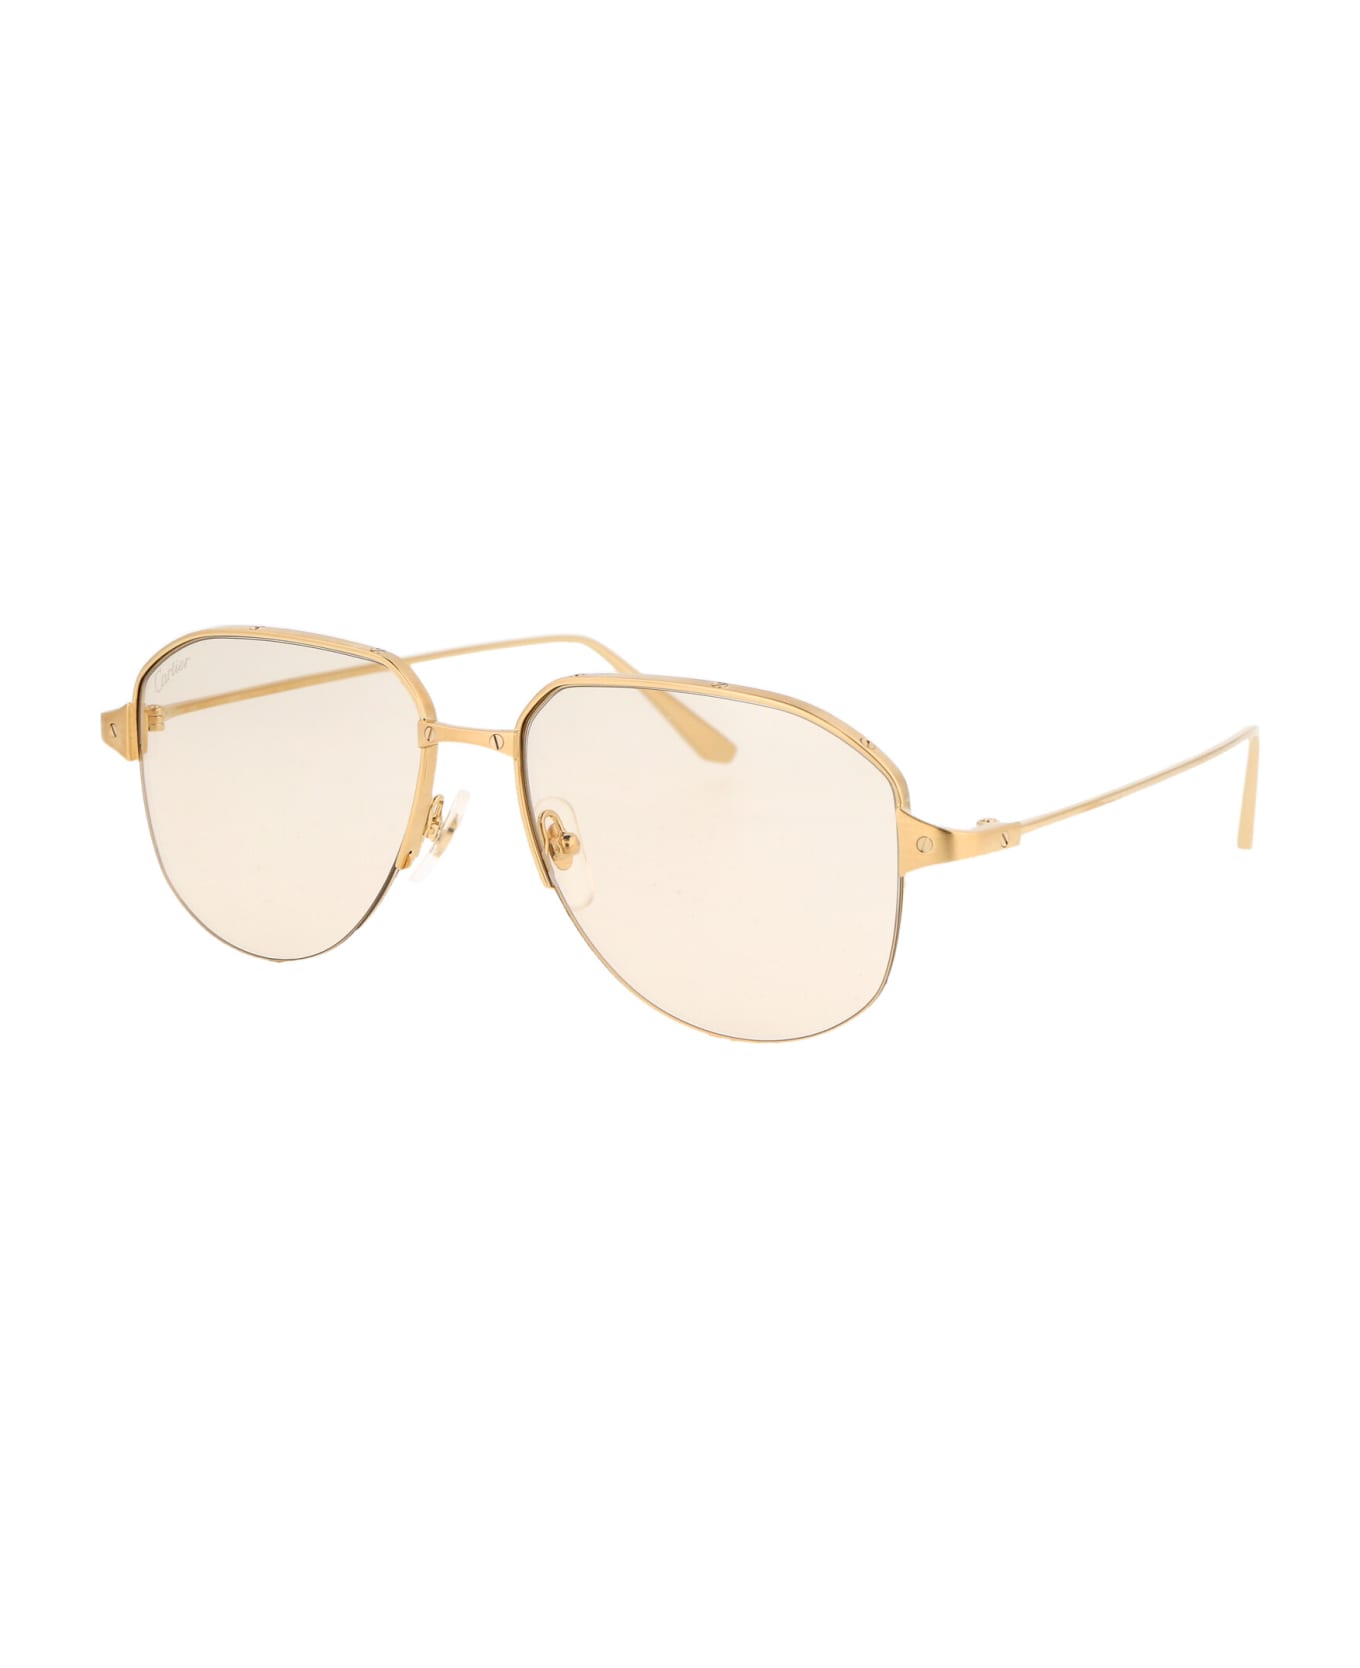 Cartier Eyewear Ct0352s Sunglasses - 002 GOLD GOLD TRANSPARENT